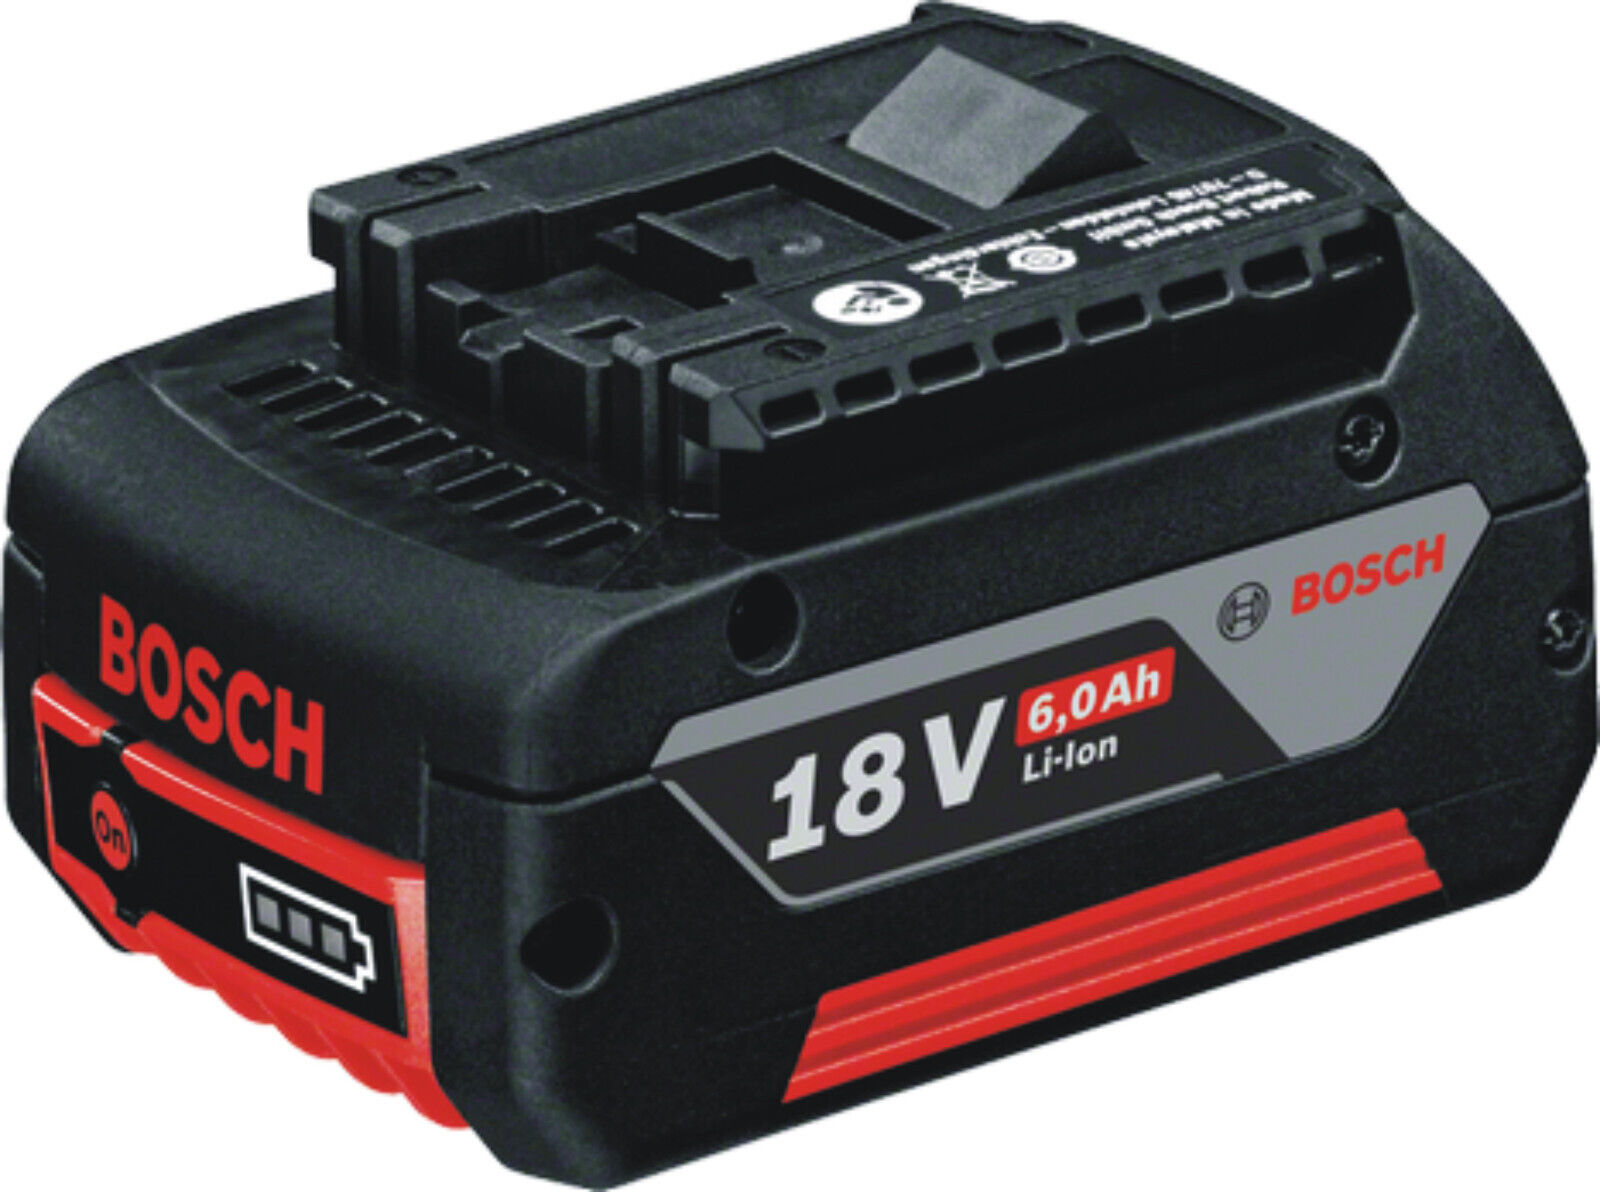 Bosch Professional GBA 18V Akku 6.0 Ah Coolpack im Karton